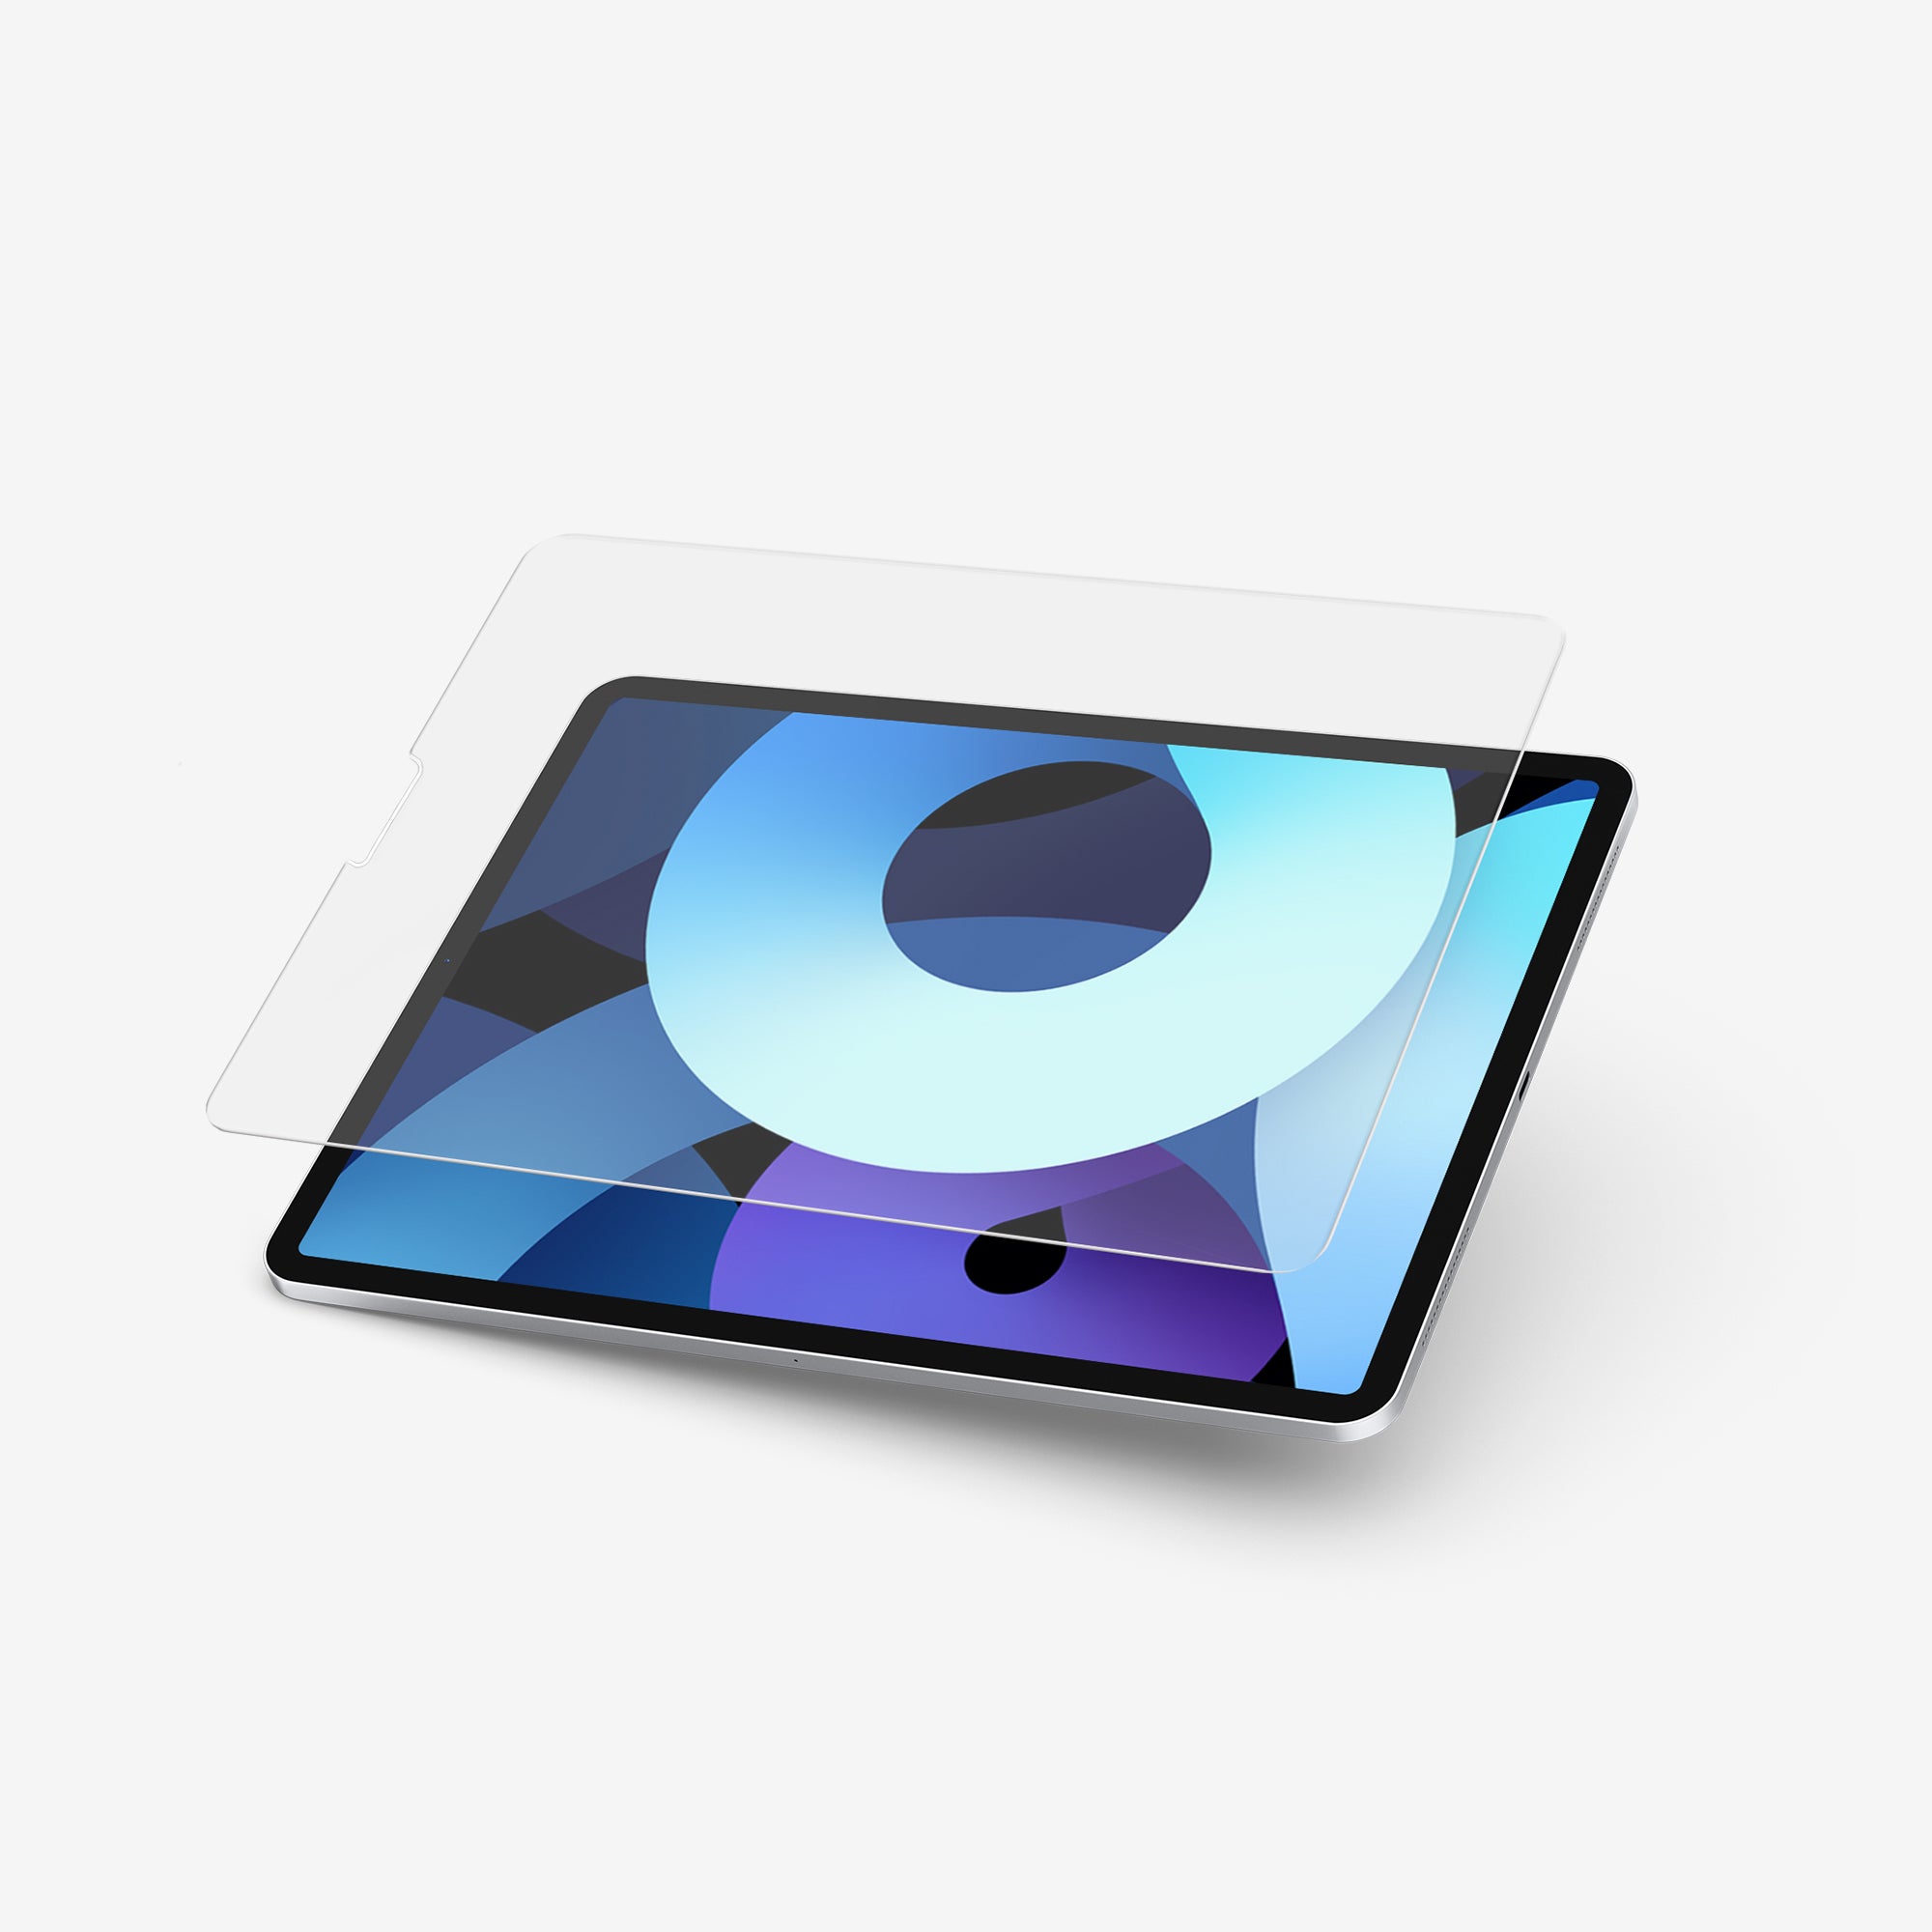 NanoArmour 10.9-inch iPad Air 4 Anti-Glare Screen Protector (2020)